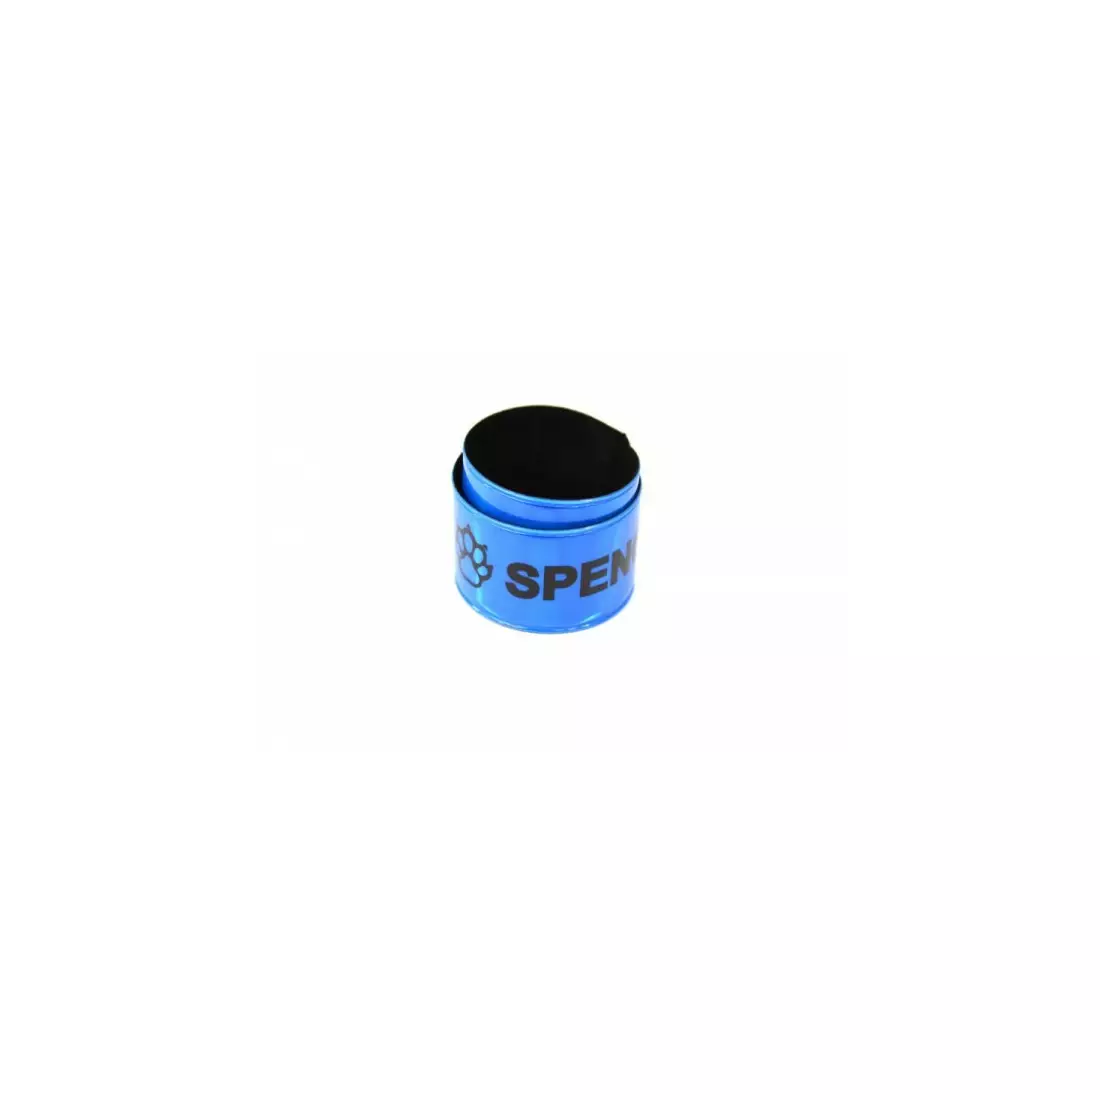 SPENCER-Reflexband, blau